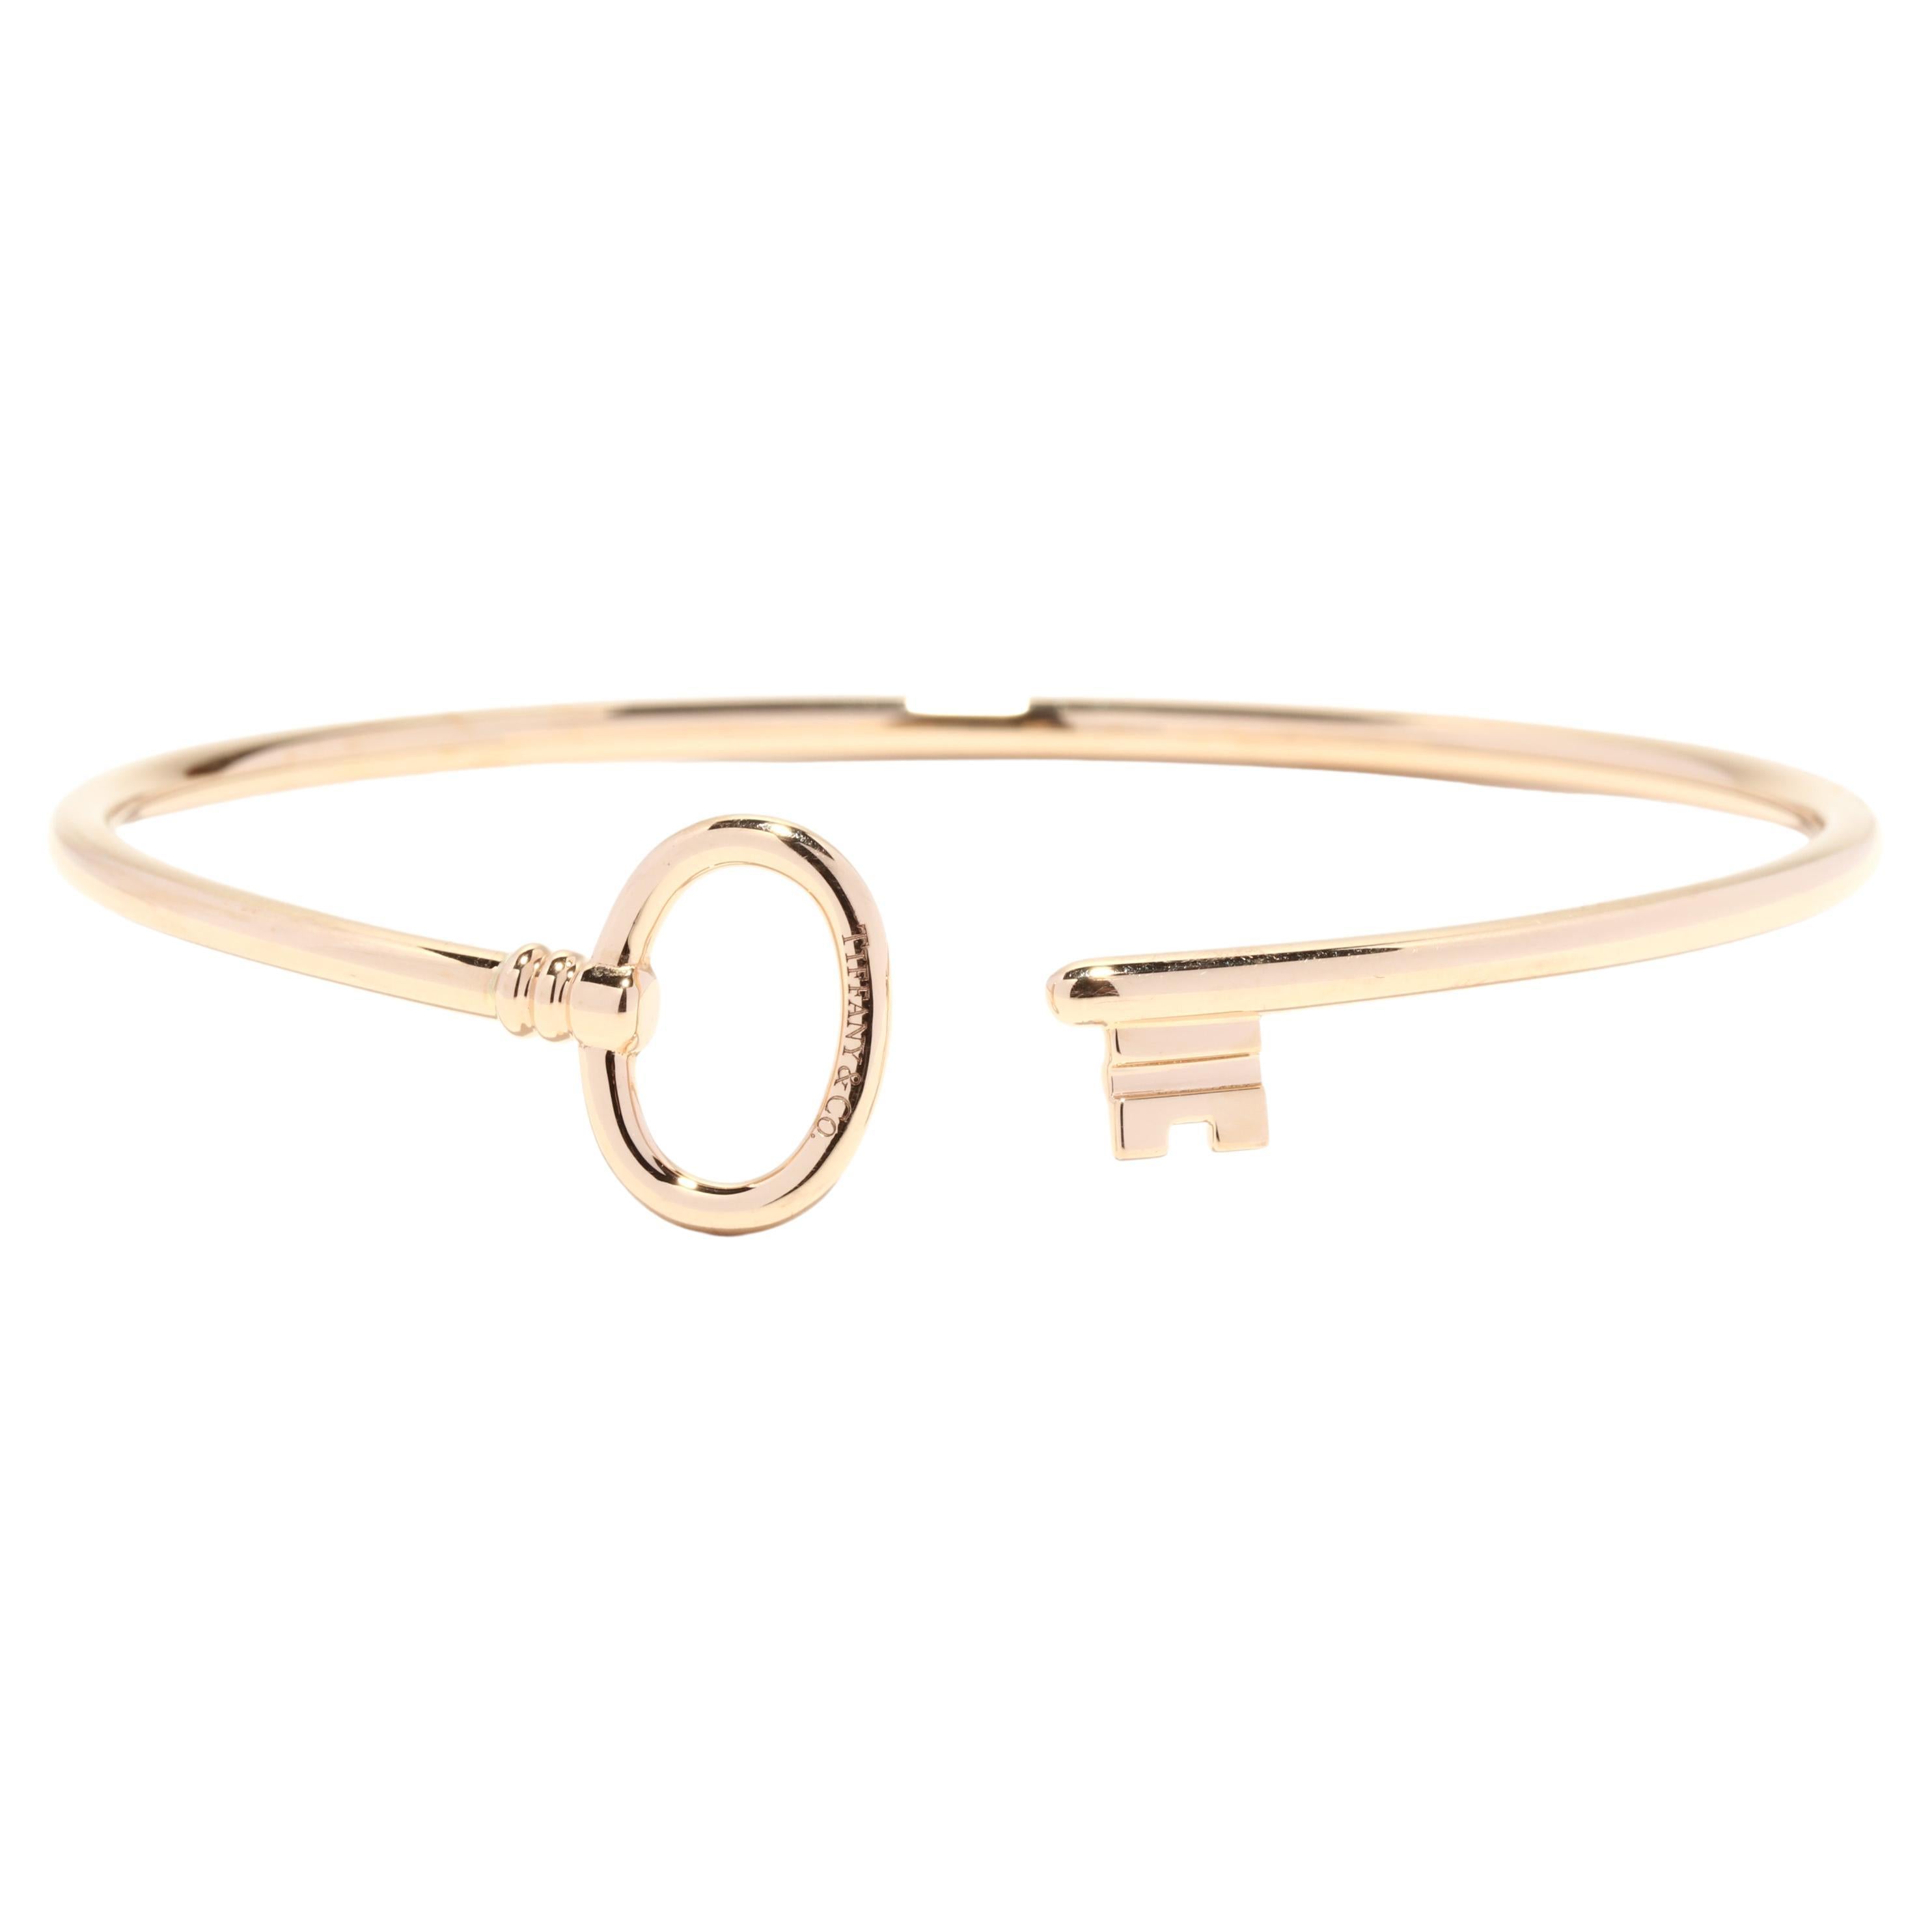 Tiffany and Company Key Wire Cuff Bracelet, 18K Gold, Flexible